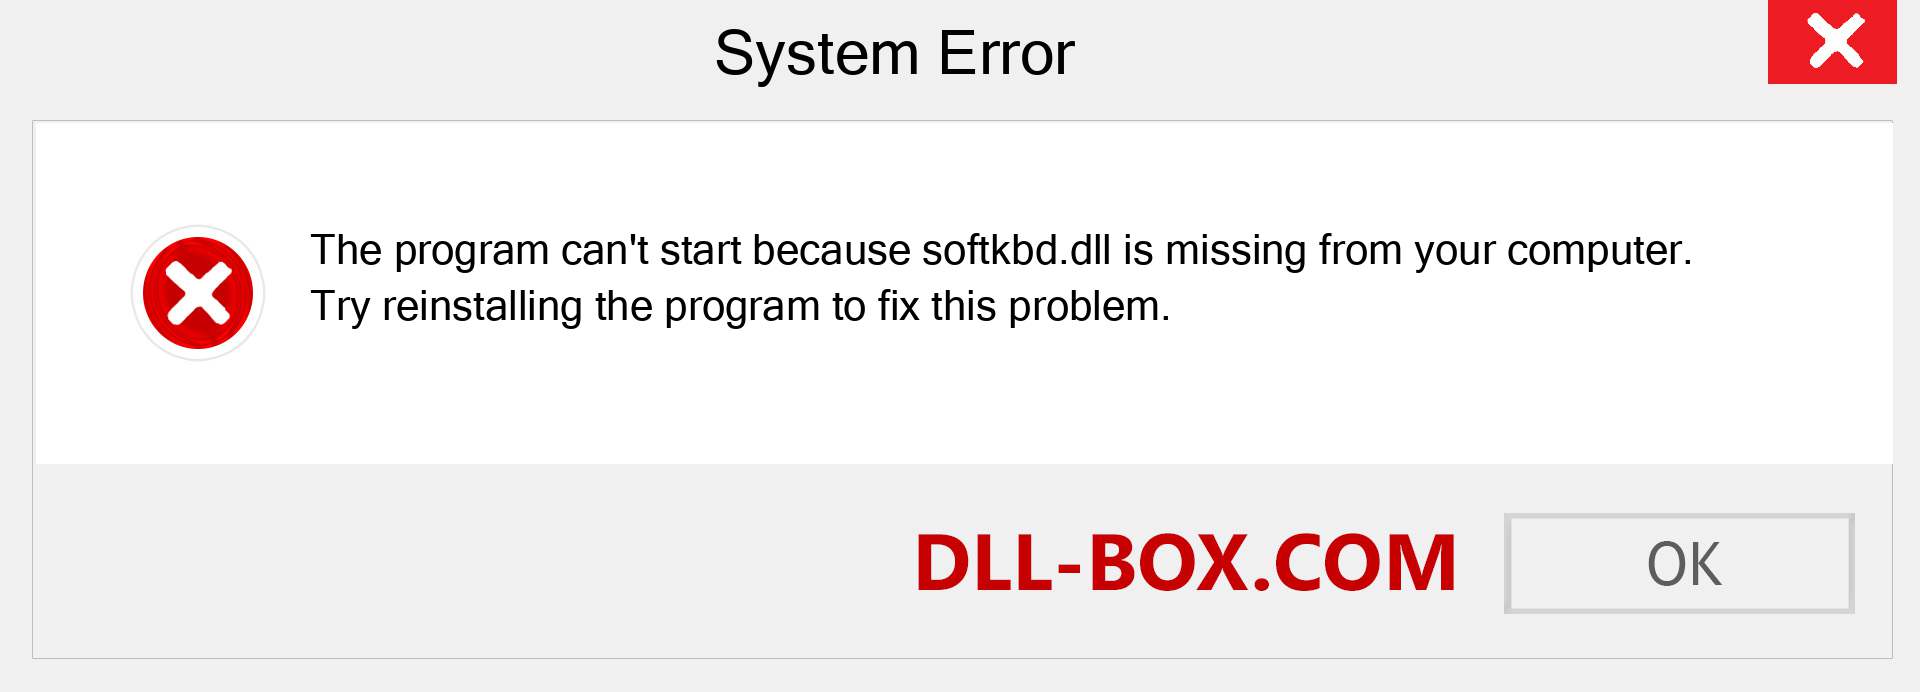  softkbd.dll file is missing?. Download for Windows 7, 8, 10 - Fix  softkbd dll Missing Error on Windows, photos, images